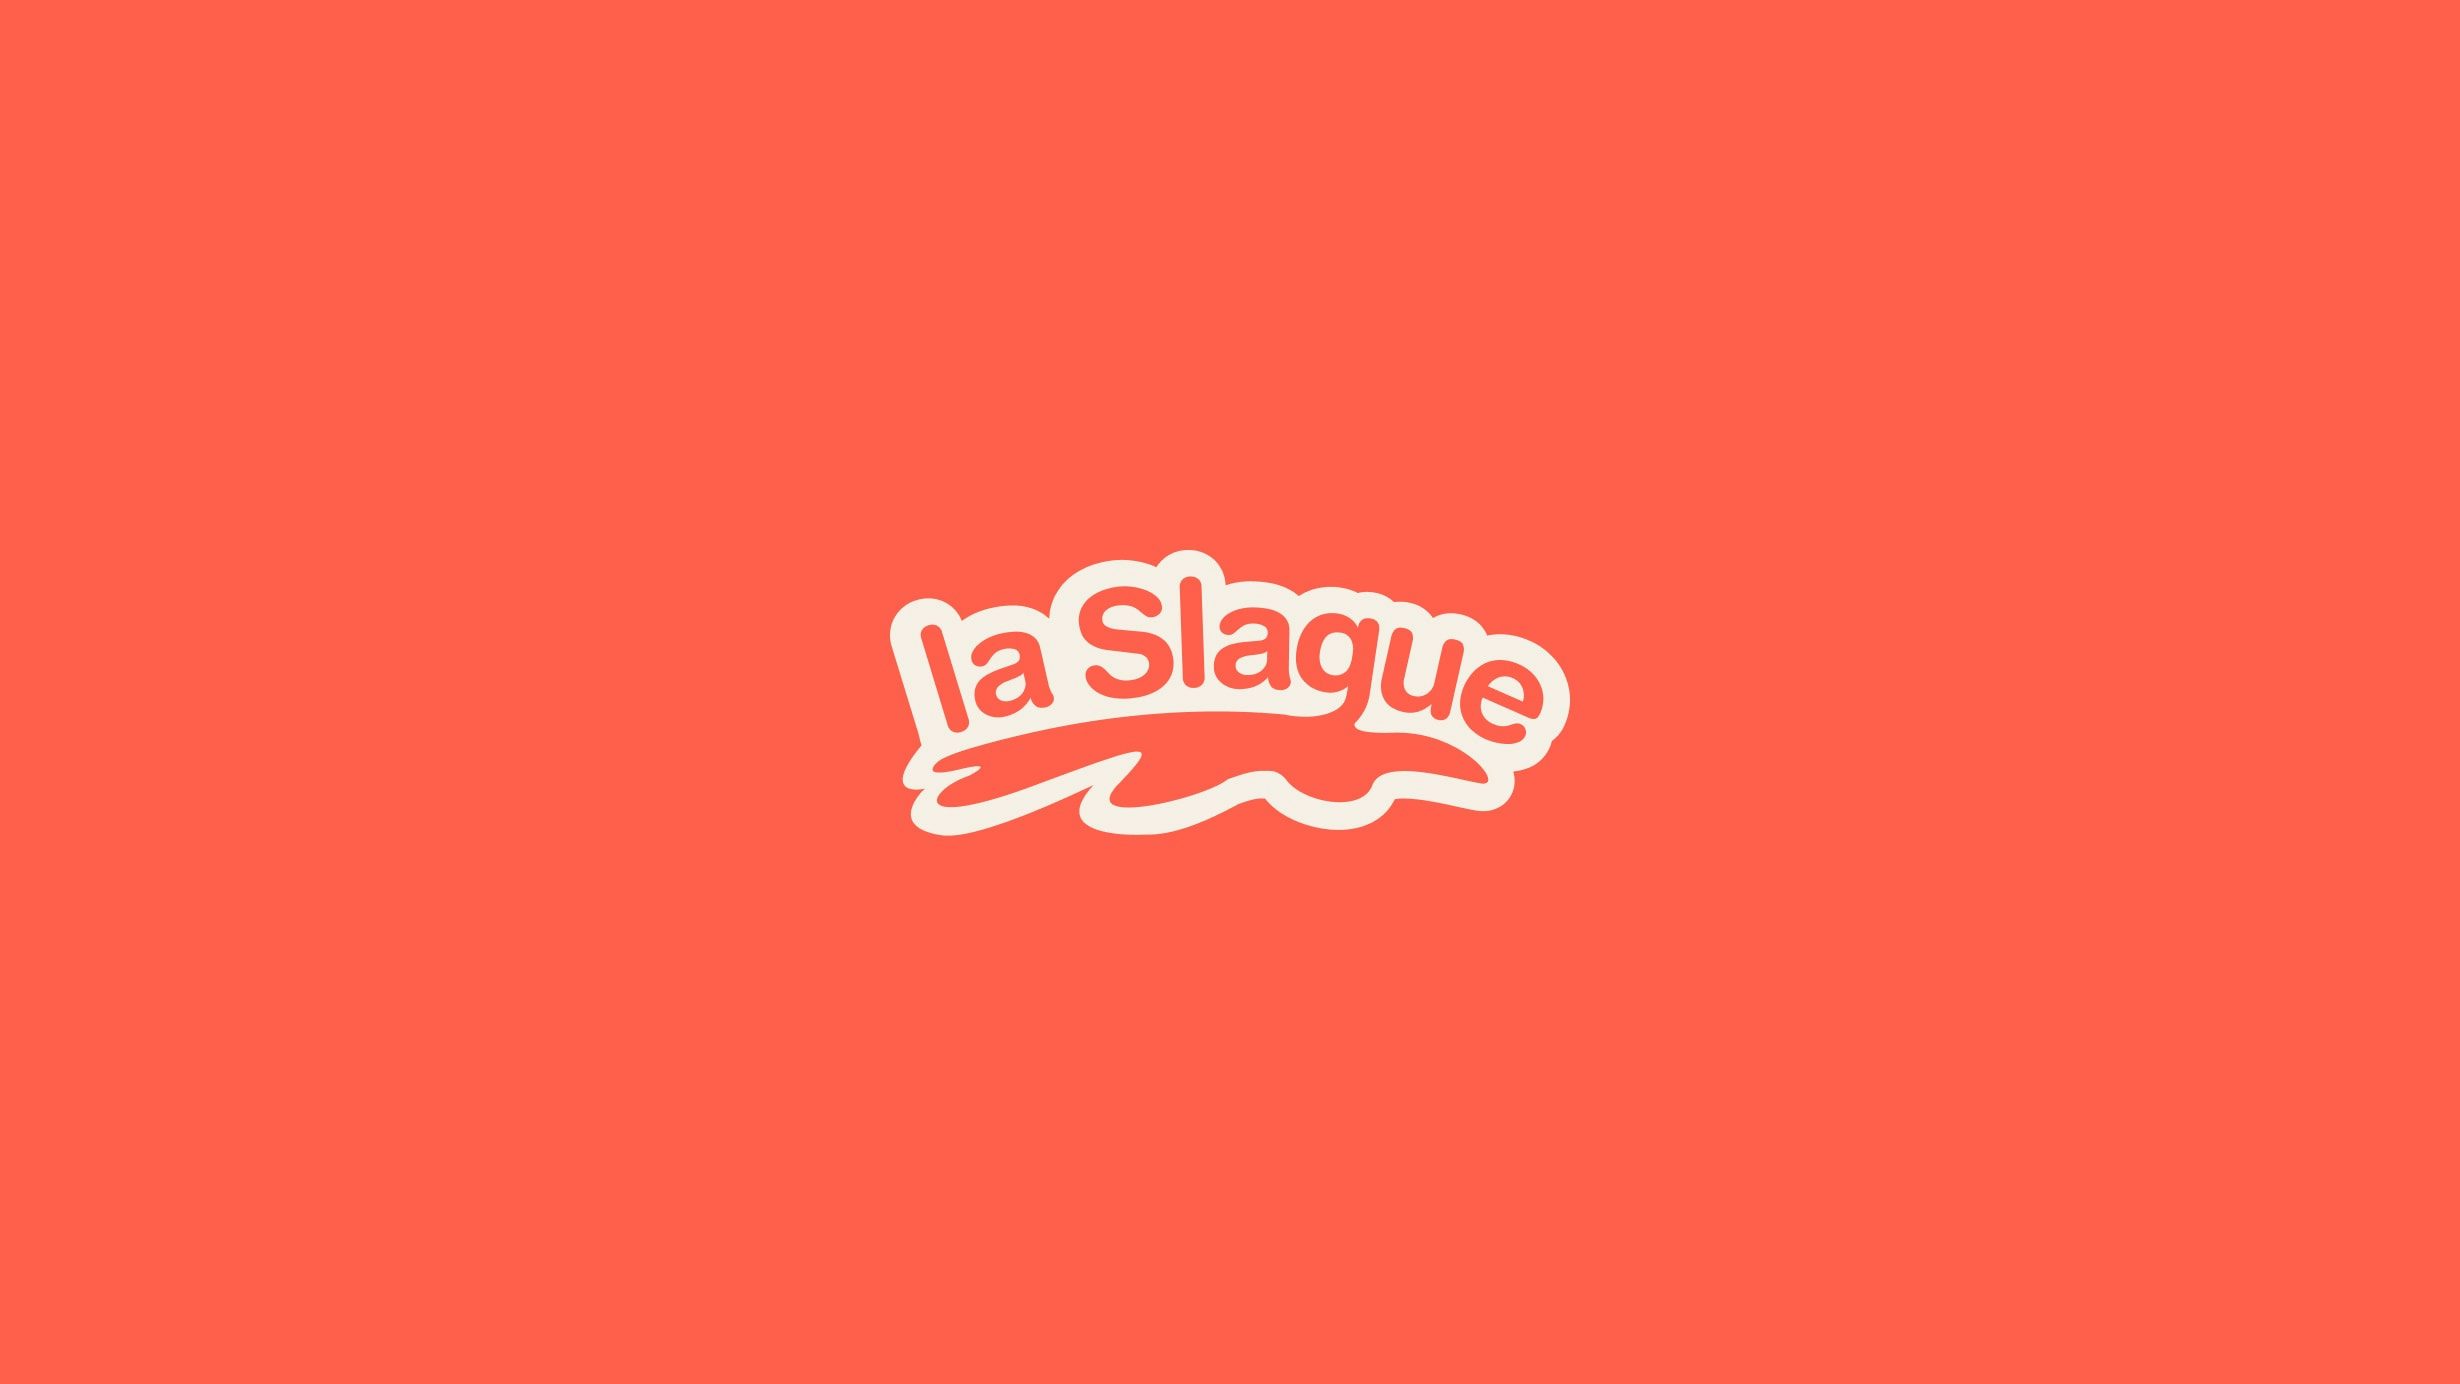 La Slague logo in hot orange